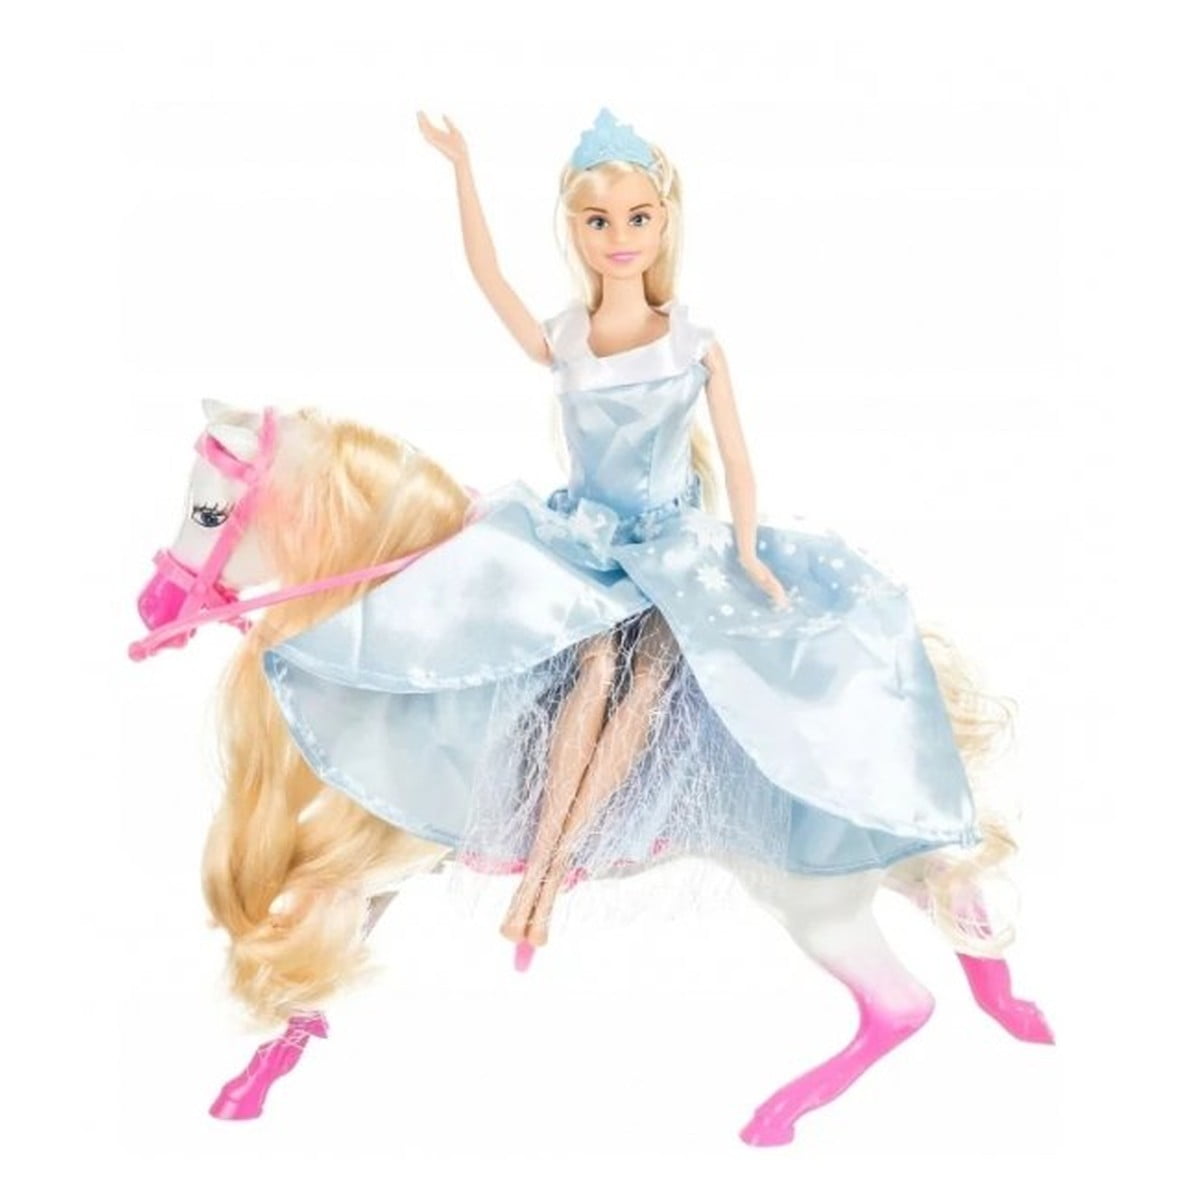 Masen Toys Puncka Barbie Ana Sally 1 6